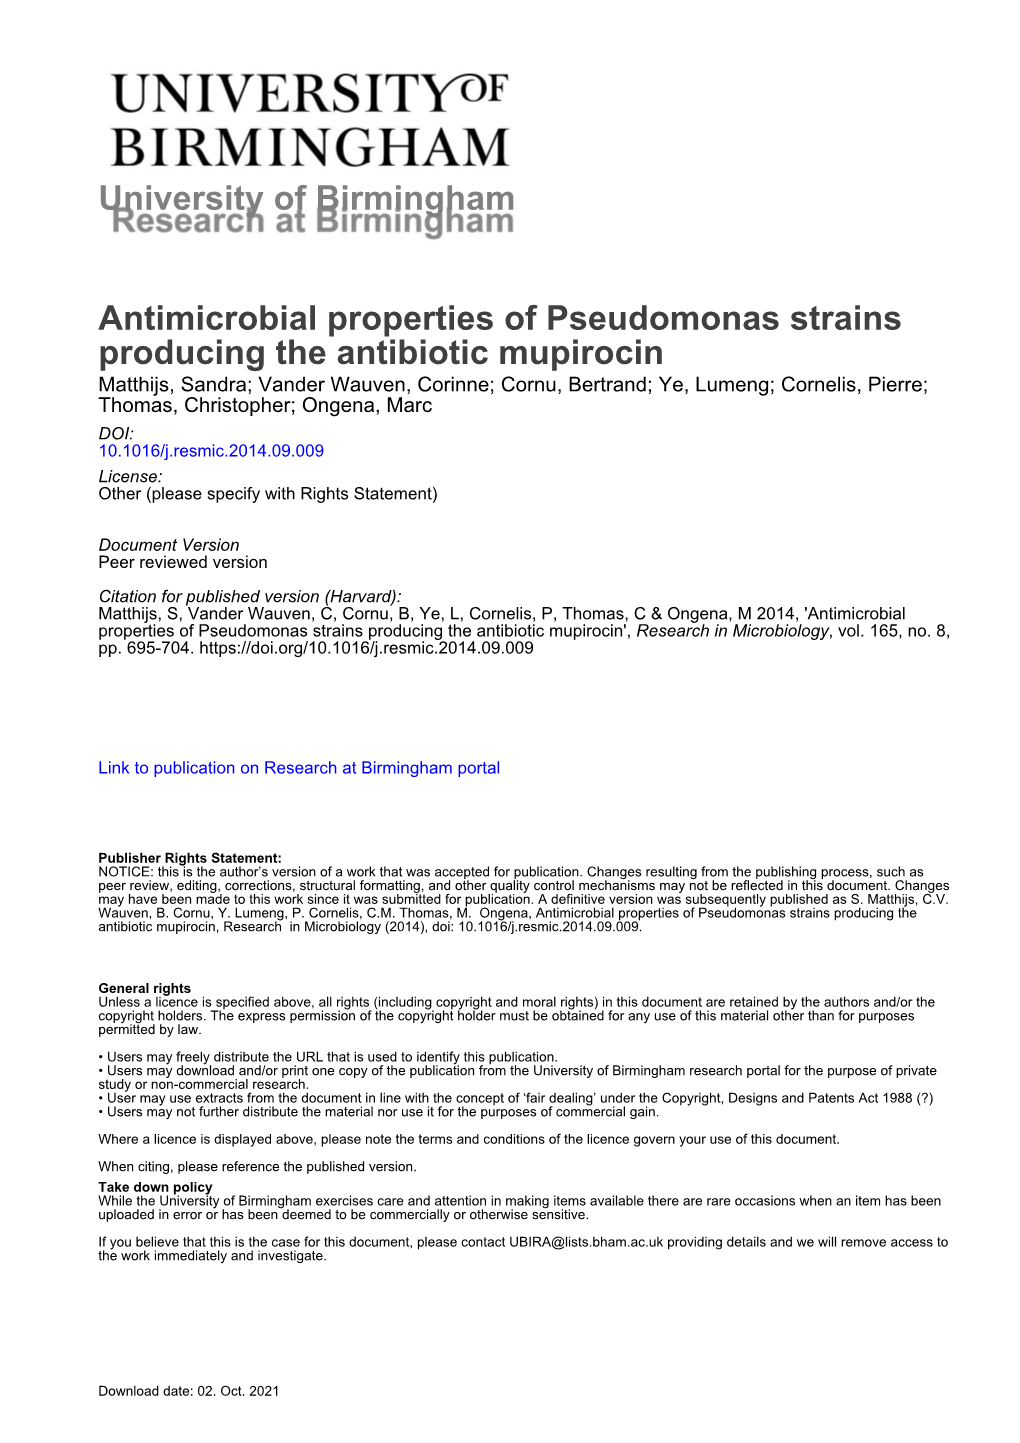 Antimicrobial Properties of Pseudomonas Strains Producing the Antibiotic Mupirocin